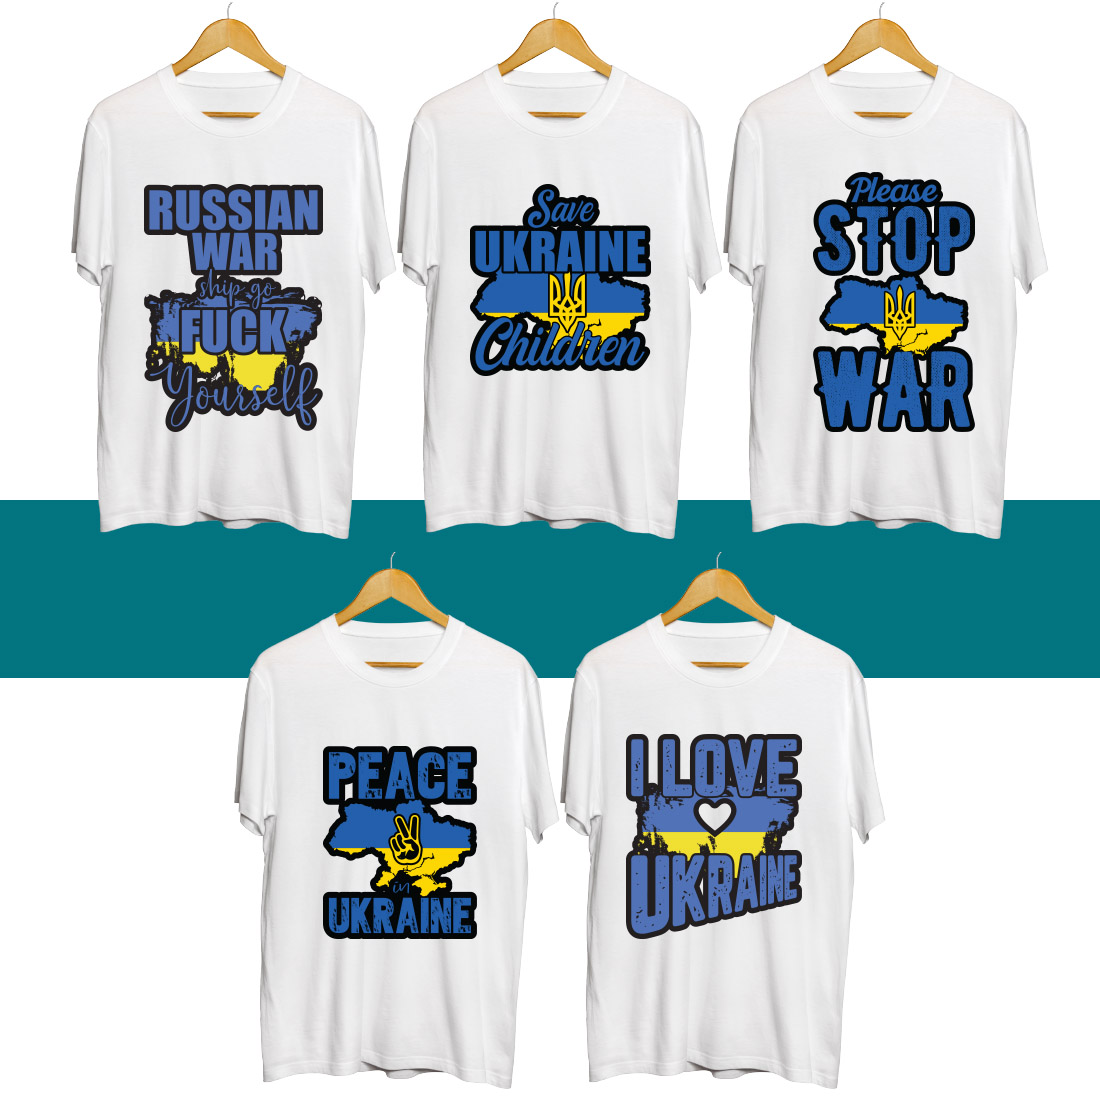 Four t - shirts that say peace is ukraine and ukraine is ukraine.